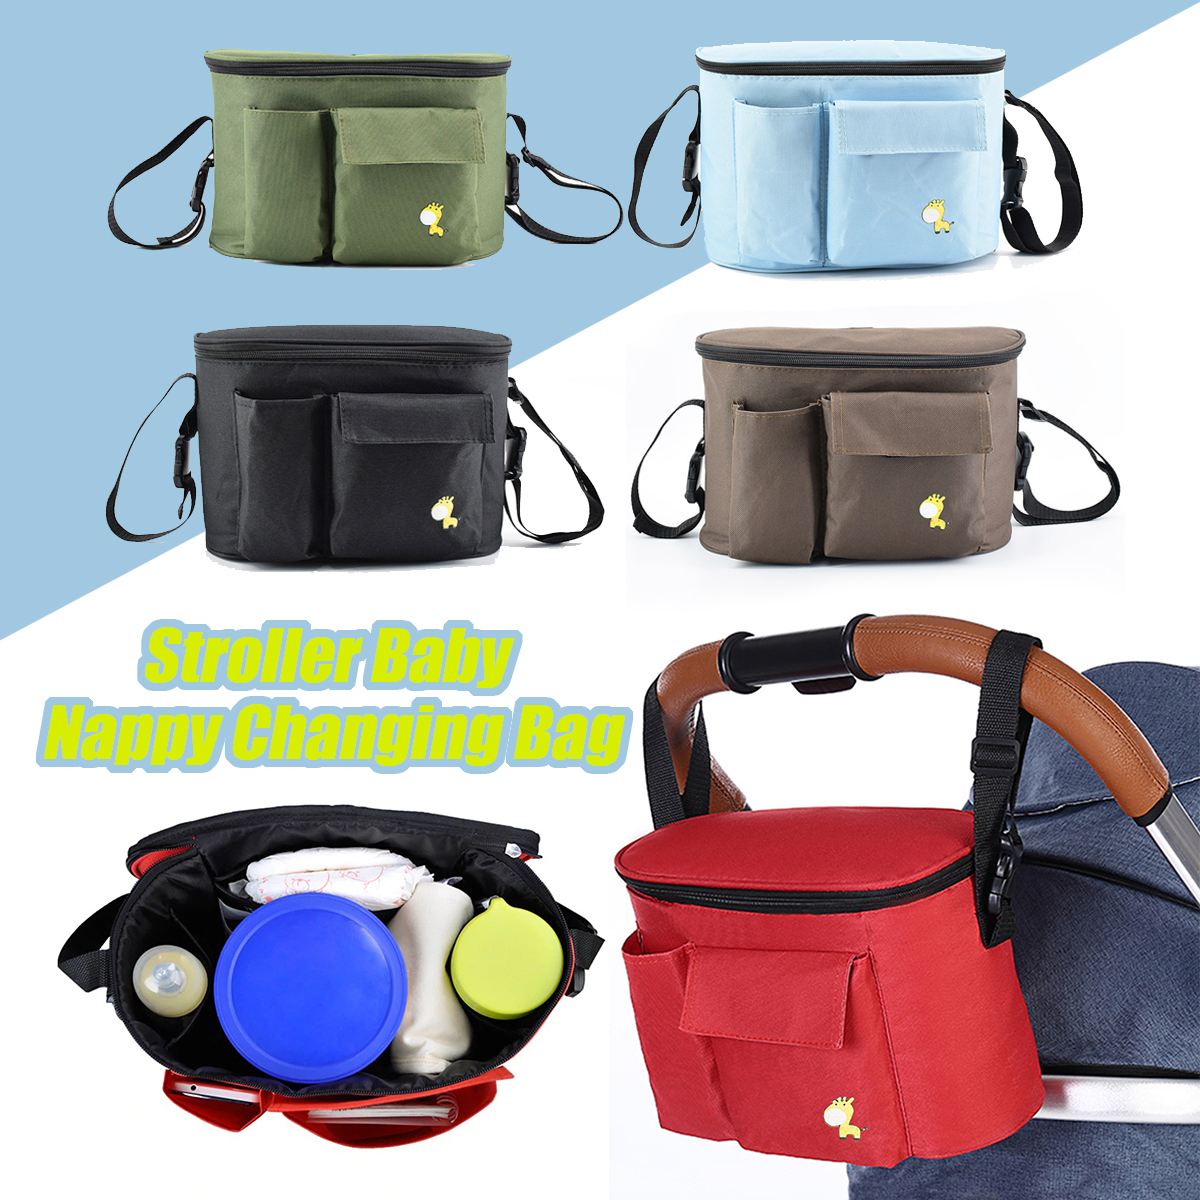 Stroller-Baby-Nappy-Changing-Bag-Travel-Shoulder-Diaper-Buggy-Pram-Pushchair-Strorage-Pouch-1523256-1